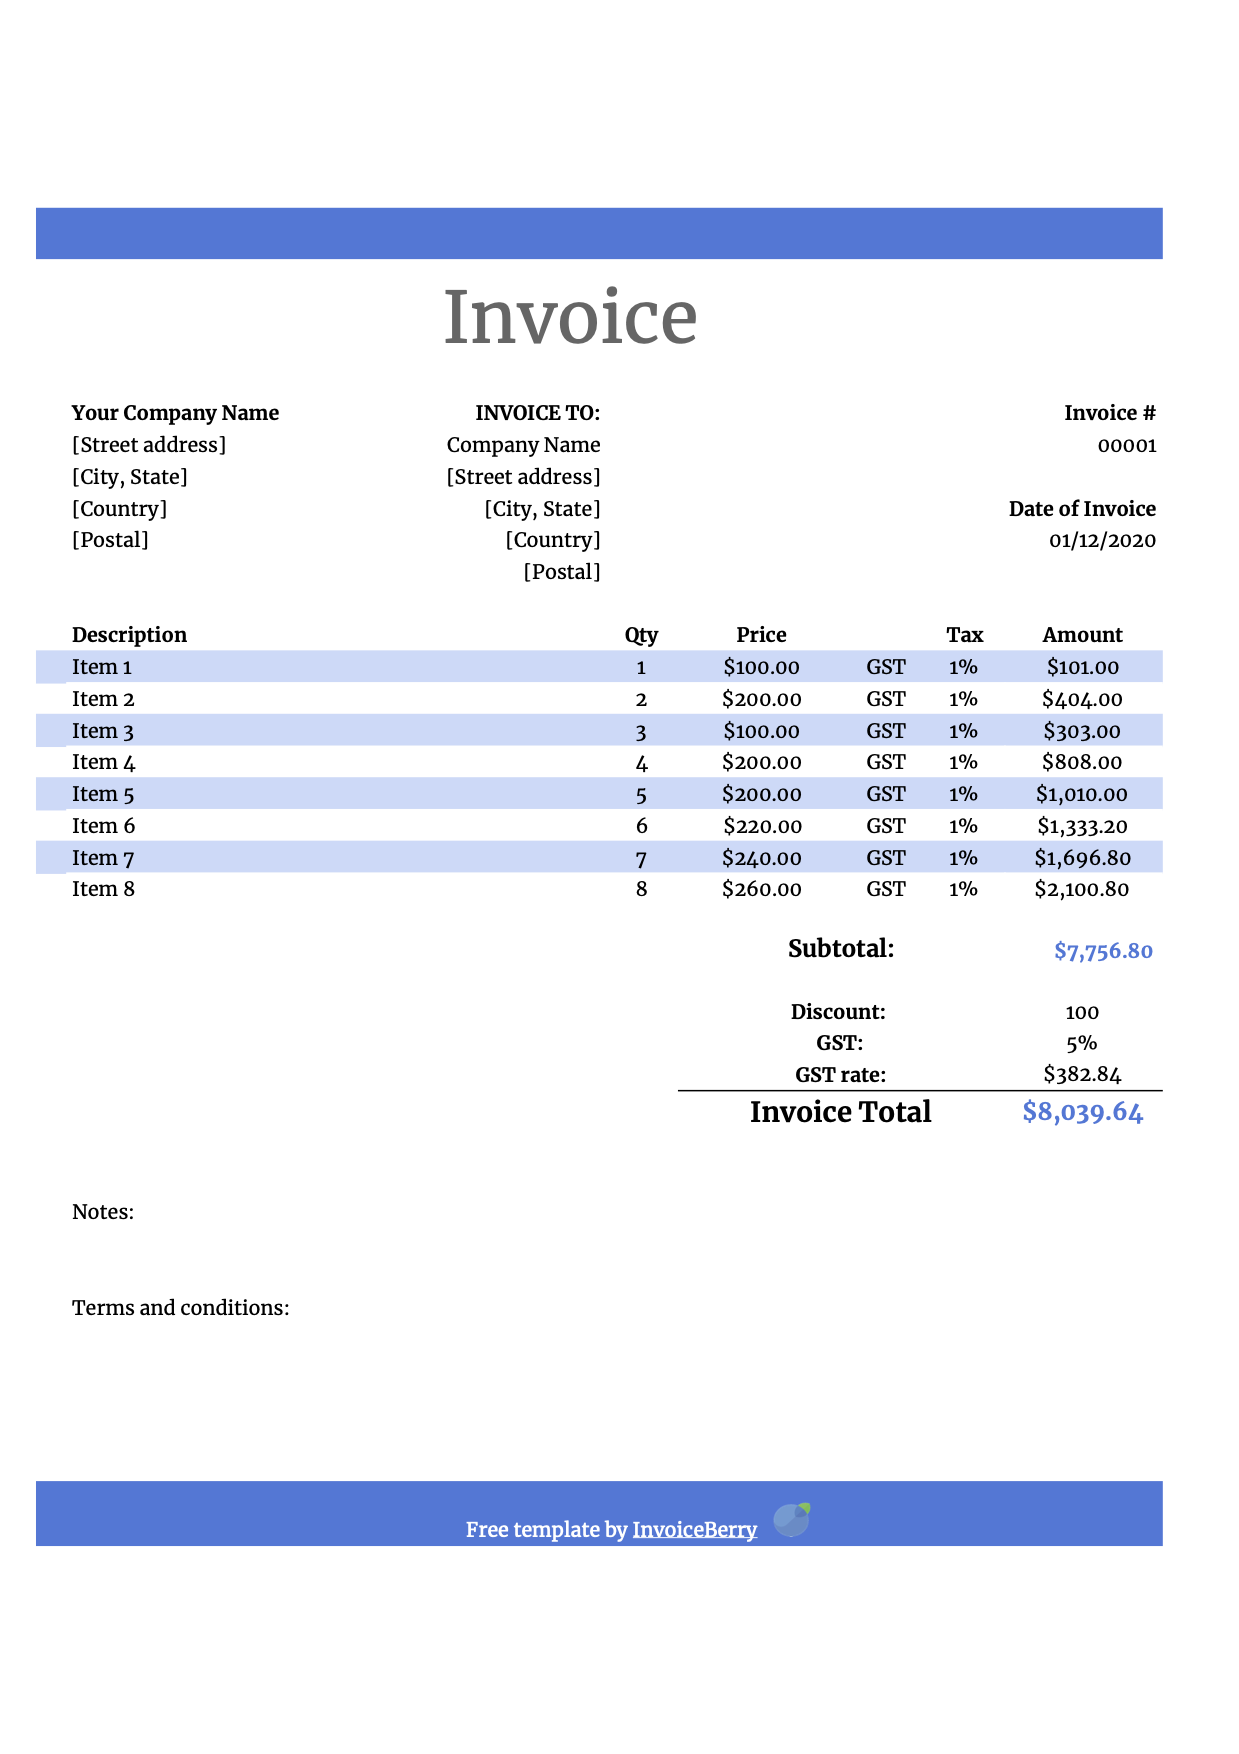 Free Google Drive Invoice Templates: Blank Docs & Sheets Invoices In Google Doc Invoice Template